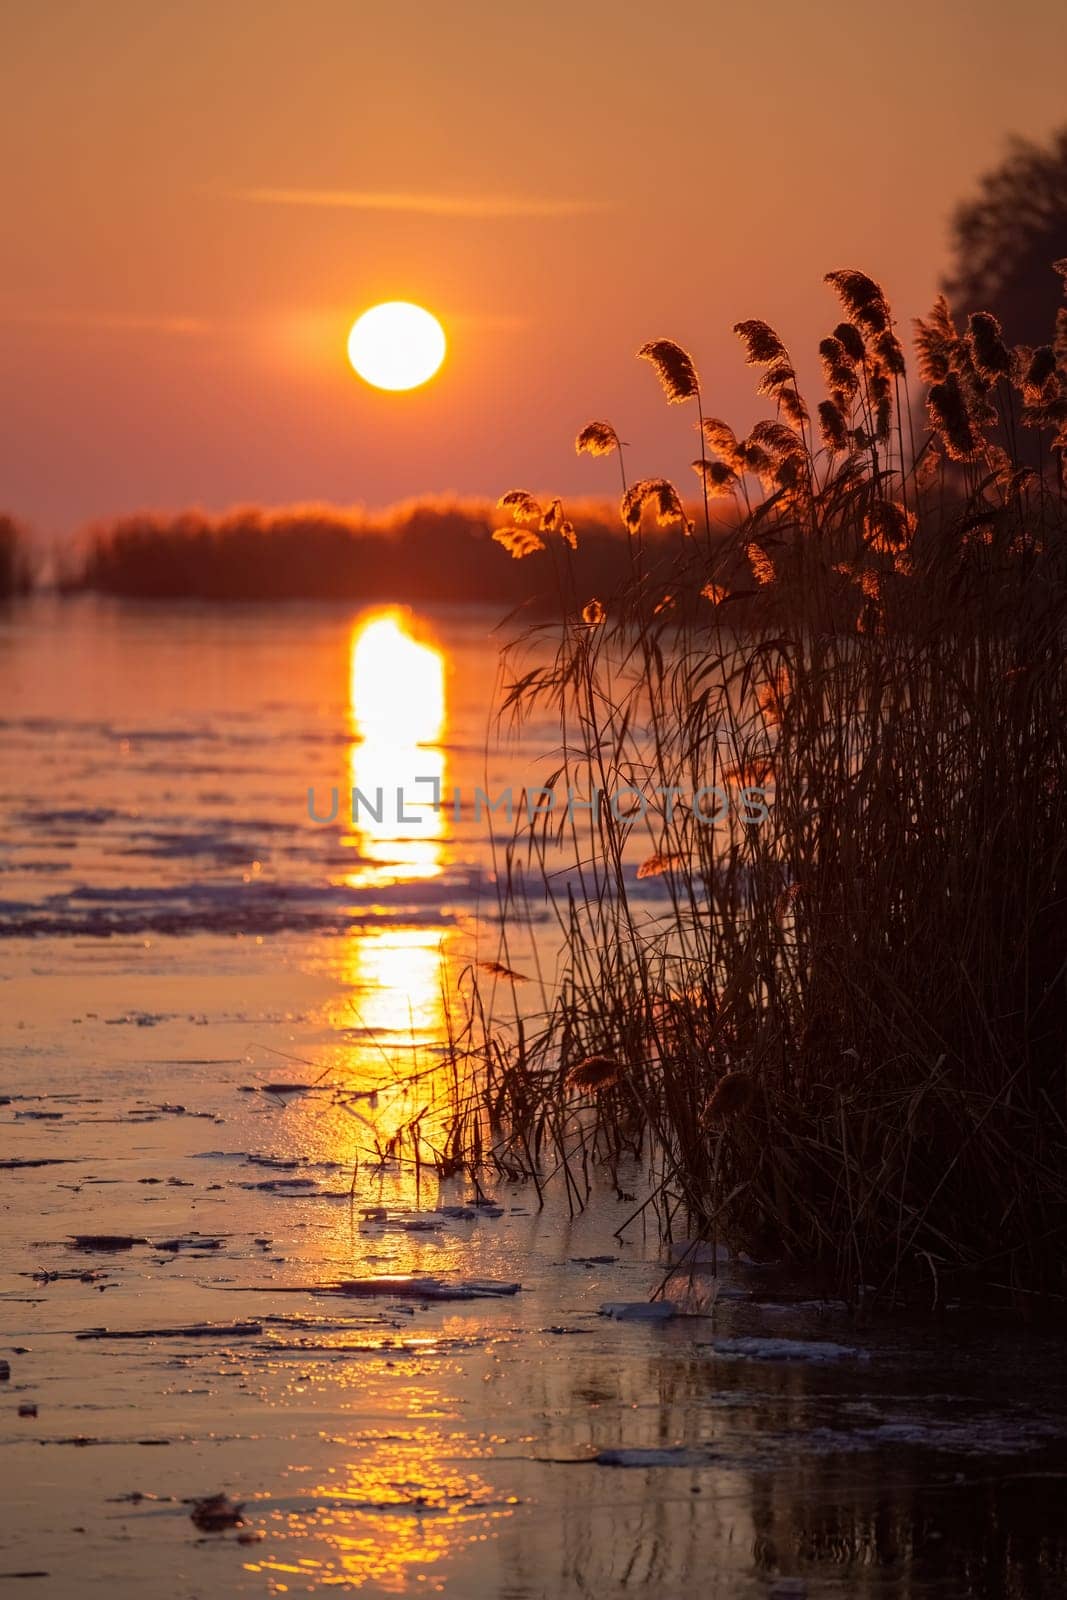 Winter sunset over the lake Balaton of Hungary